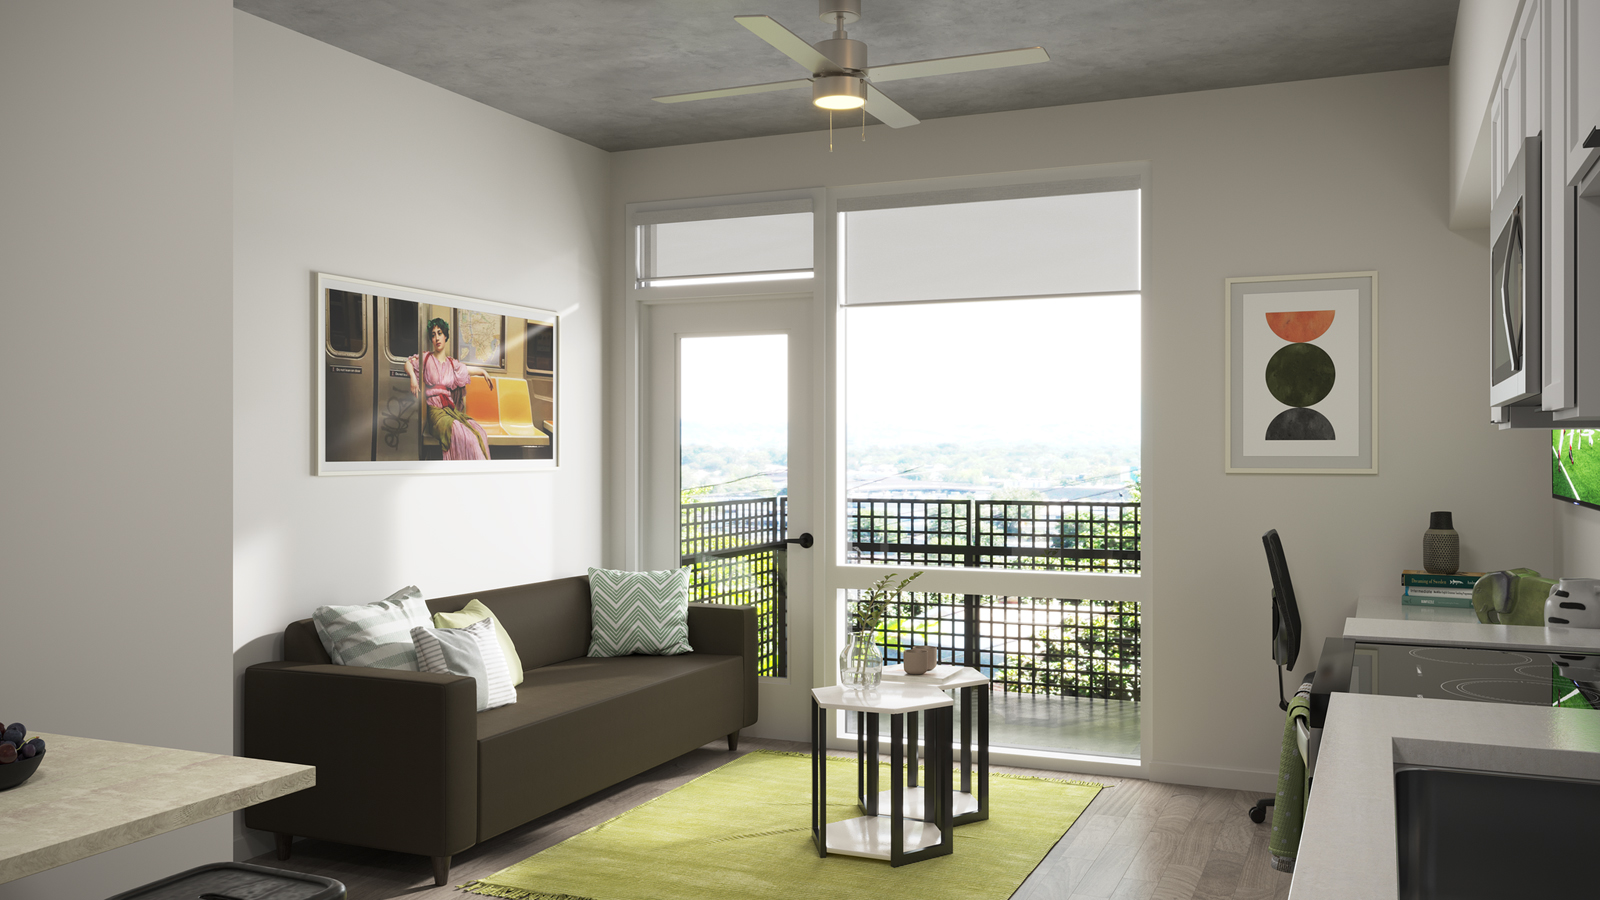 Furnished apartment interior